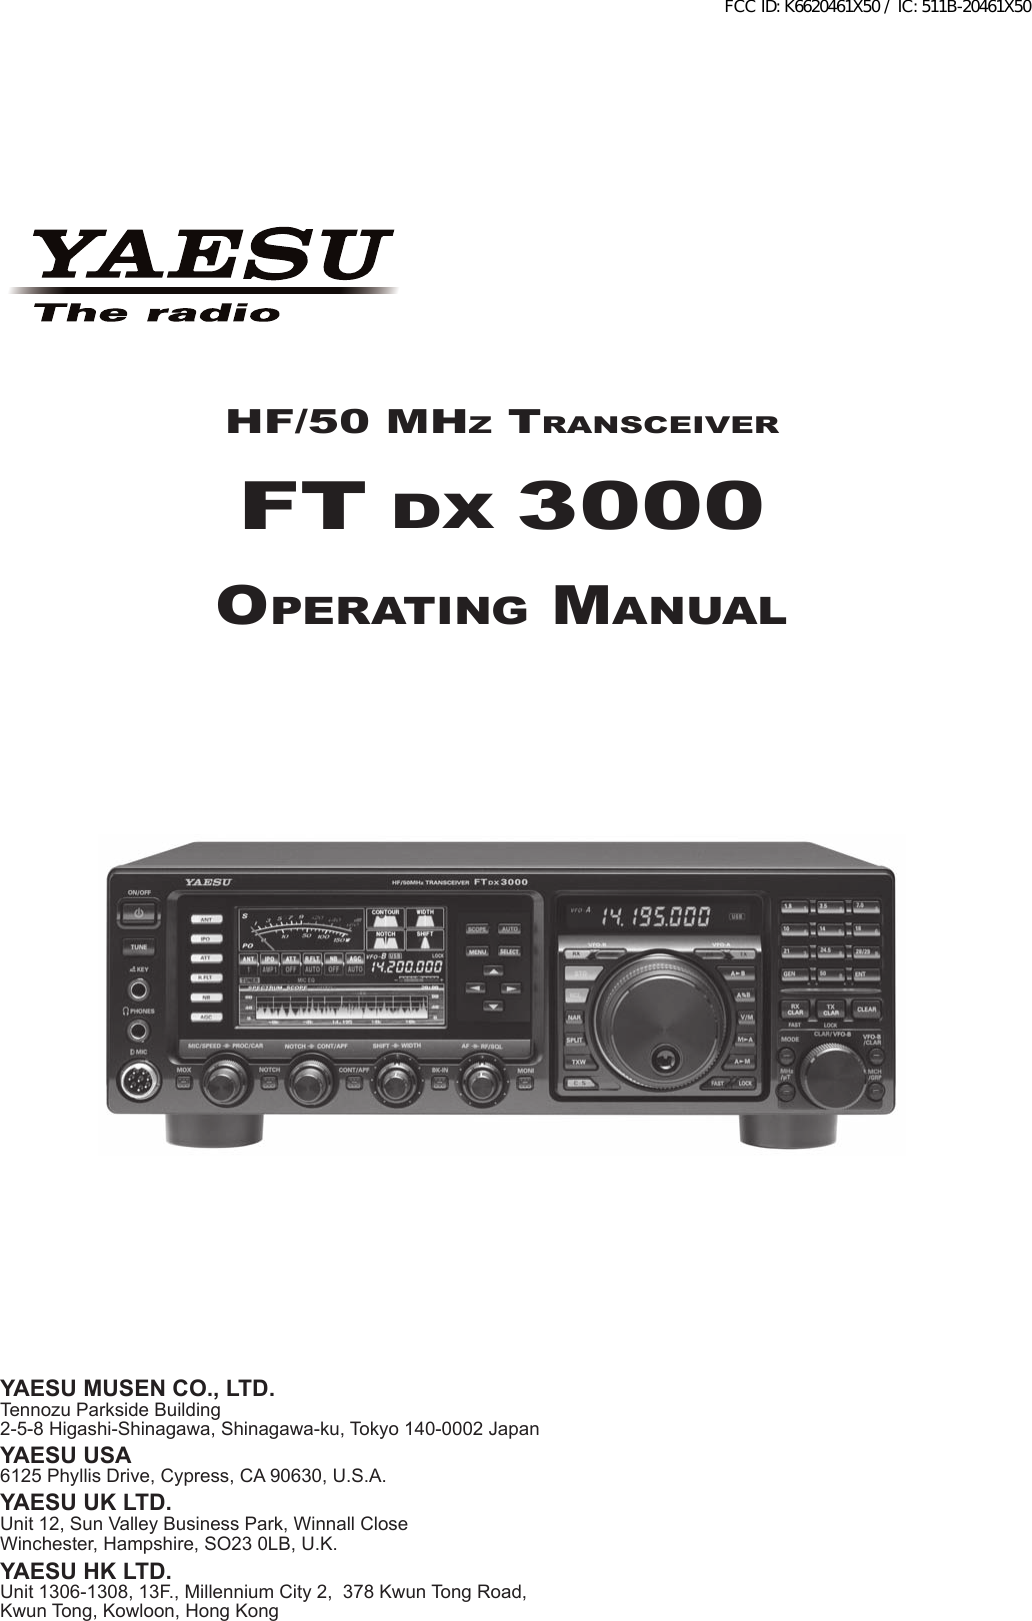 Yaesu Musen 20461x50 Scanning Receiver User Manual Ftdx3000 Operating